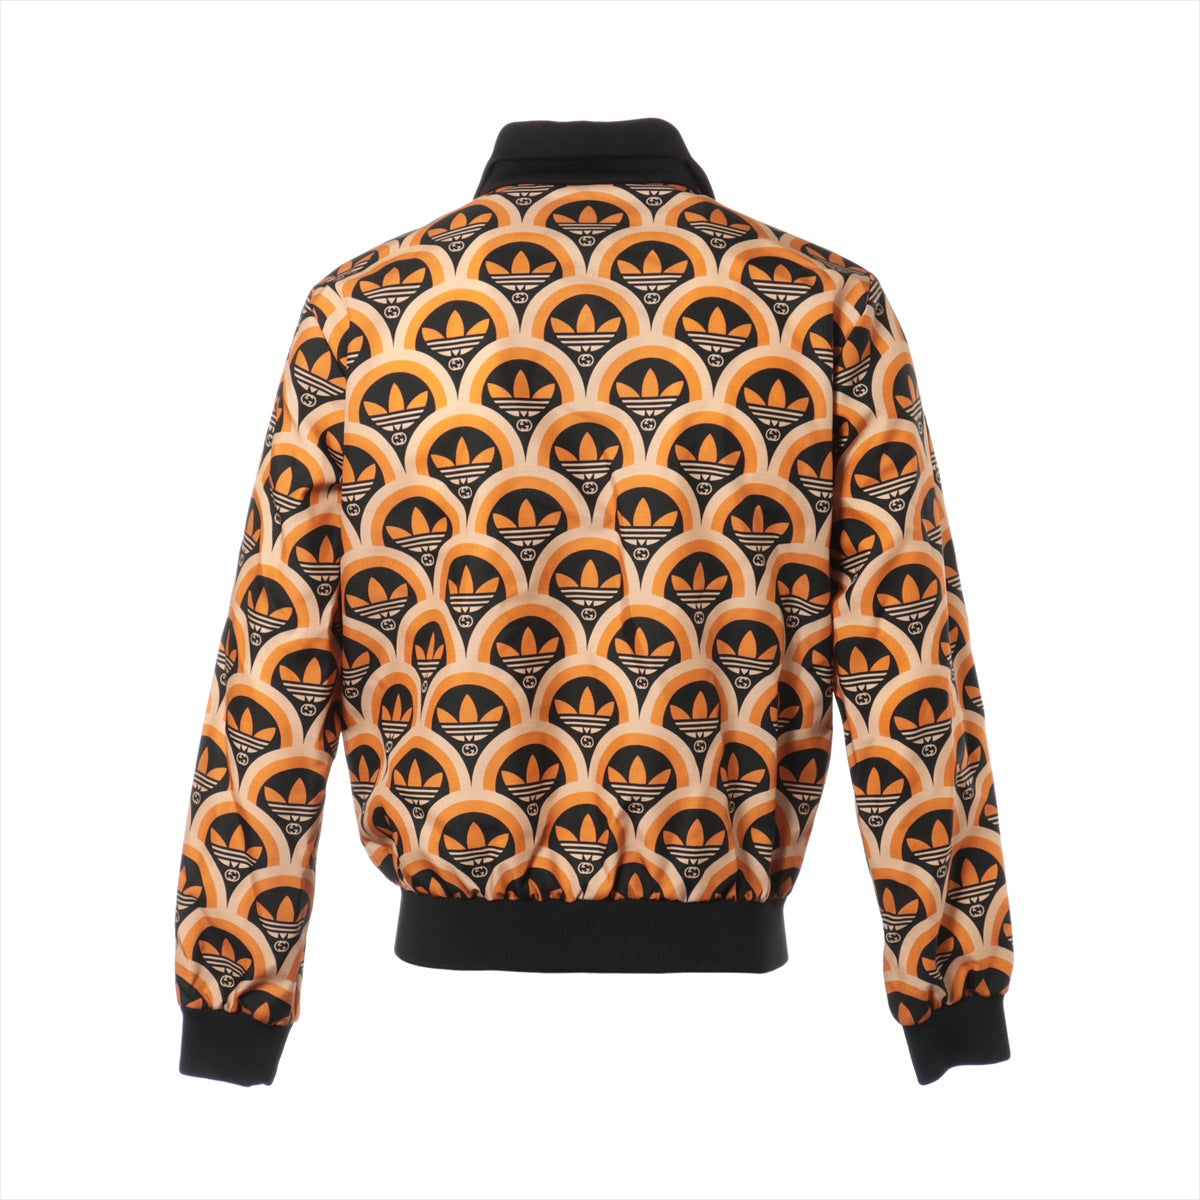 Gucci x Adidas Interlocking G 22 years Nylon Jacket 44 Men's Black x orange  696653